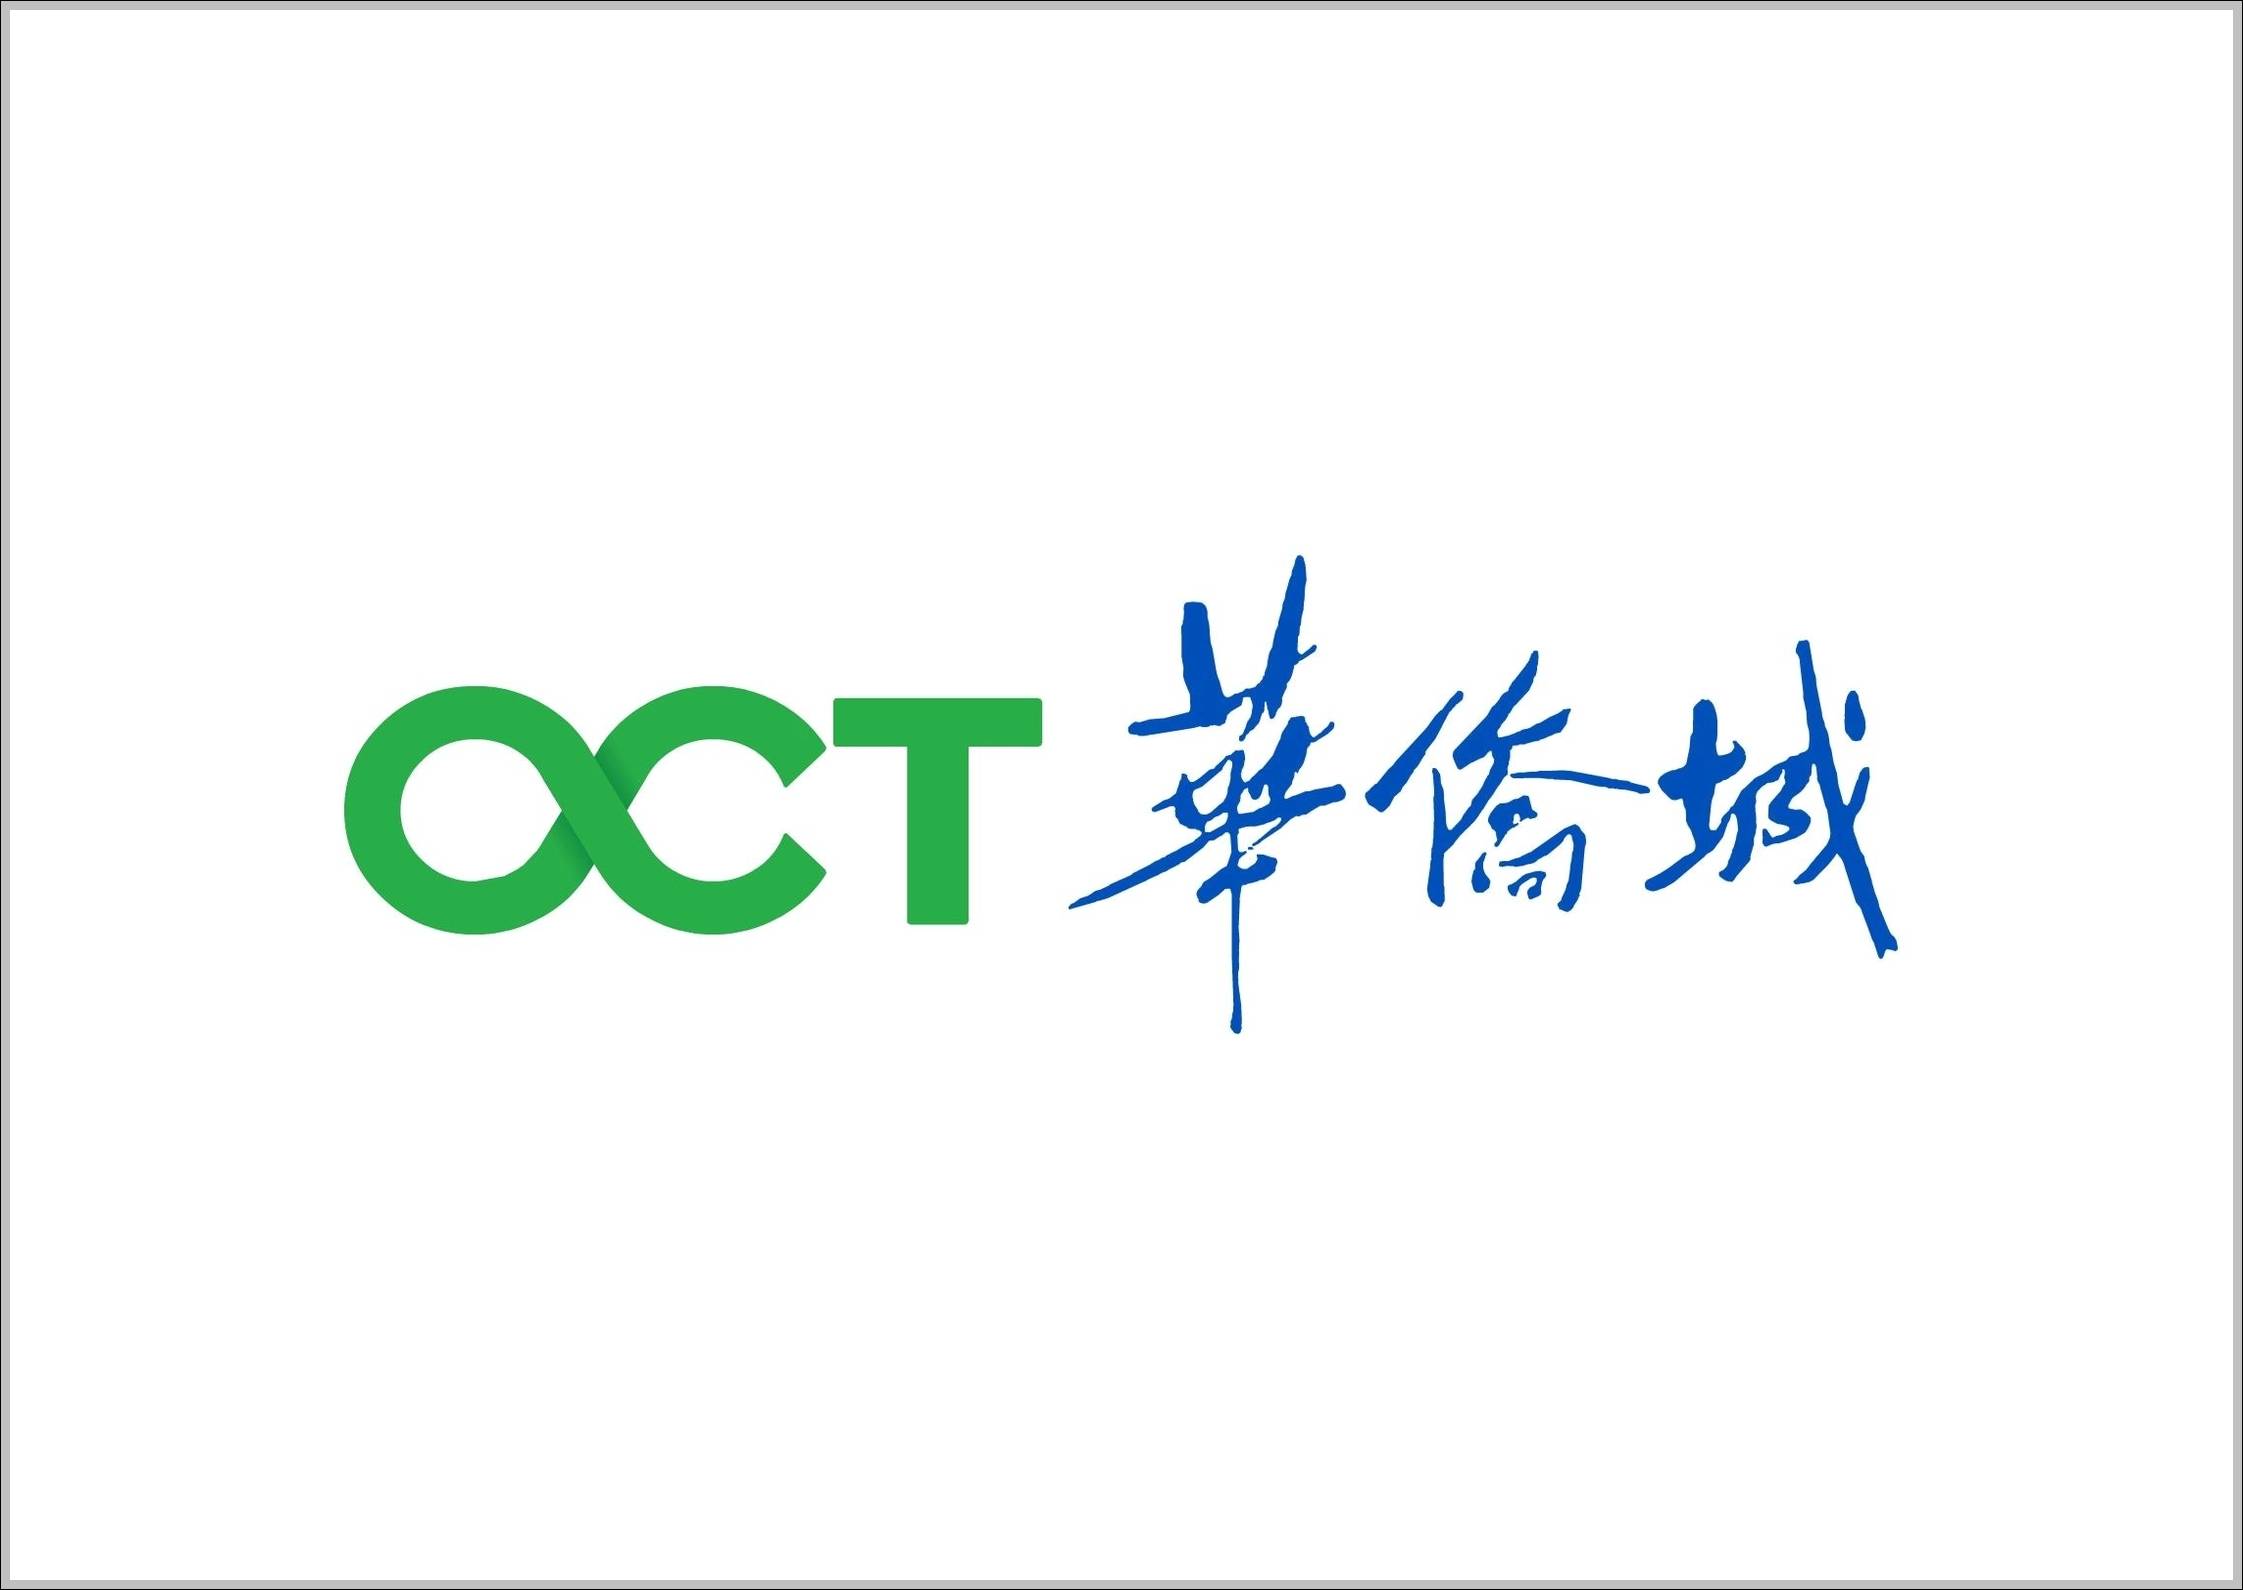 Overseas Chinese Town logo